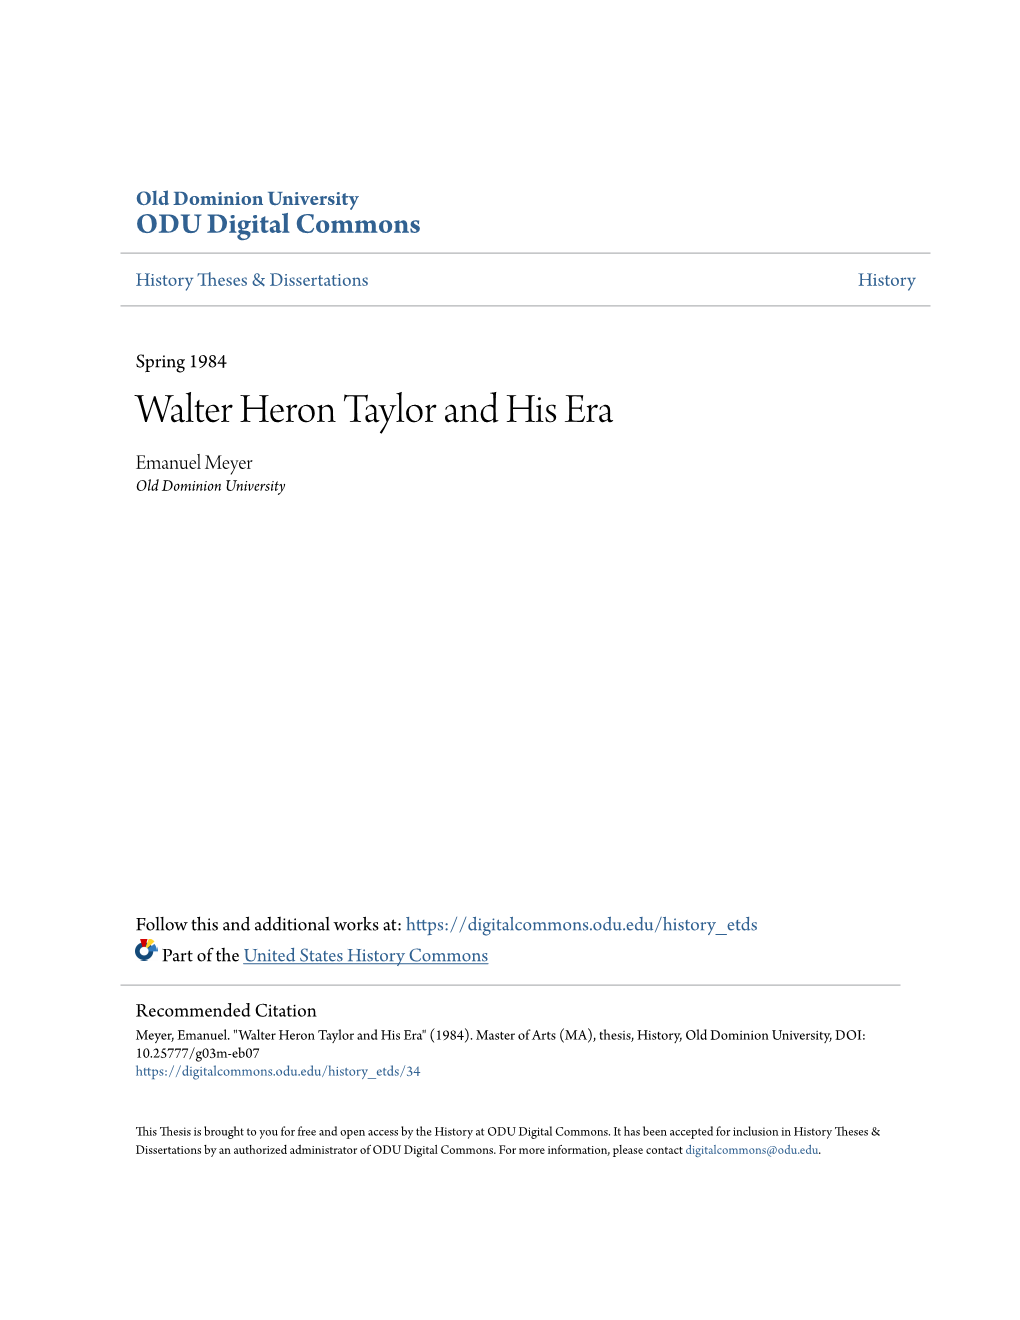 Walter Heron Taylor and His Era Emanuel Meyer Old Dominion University